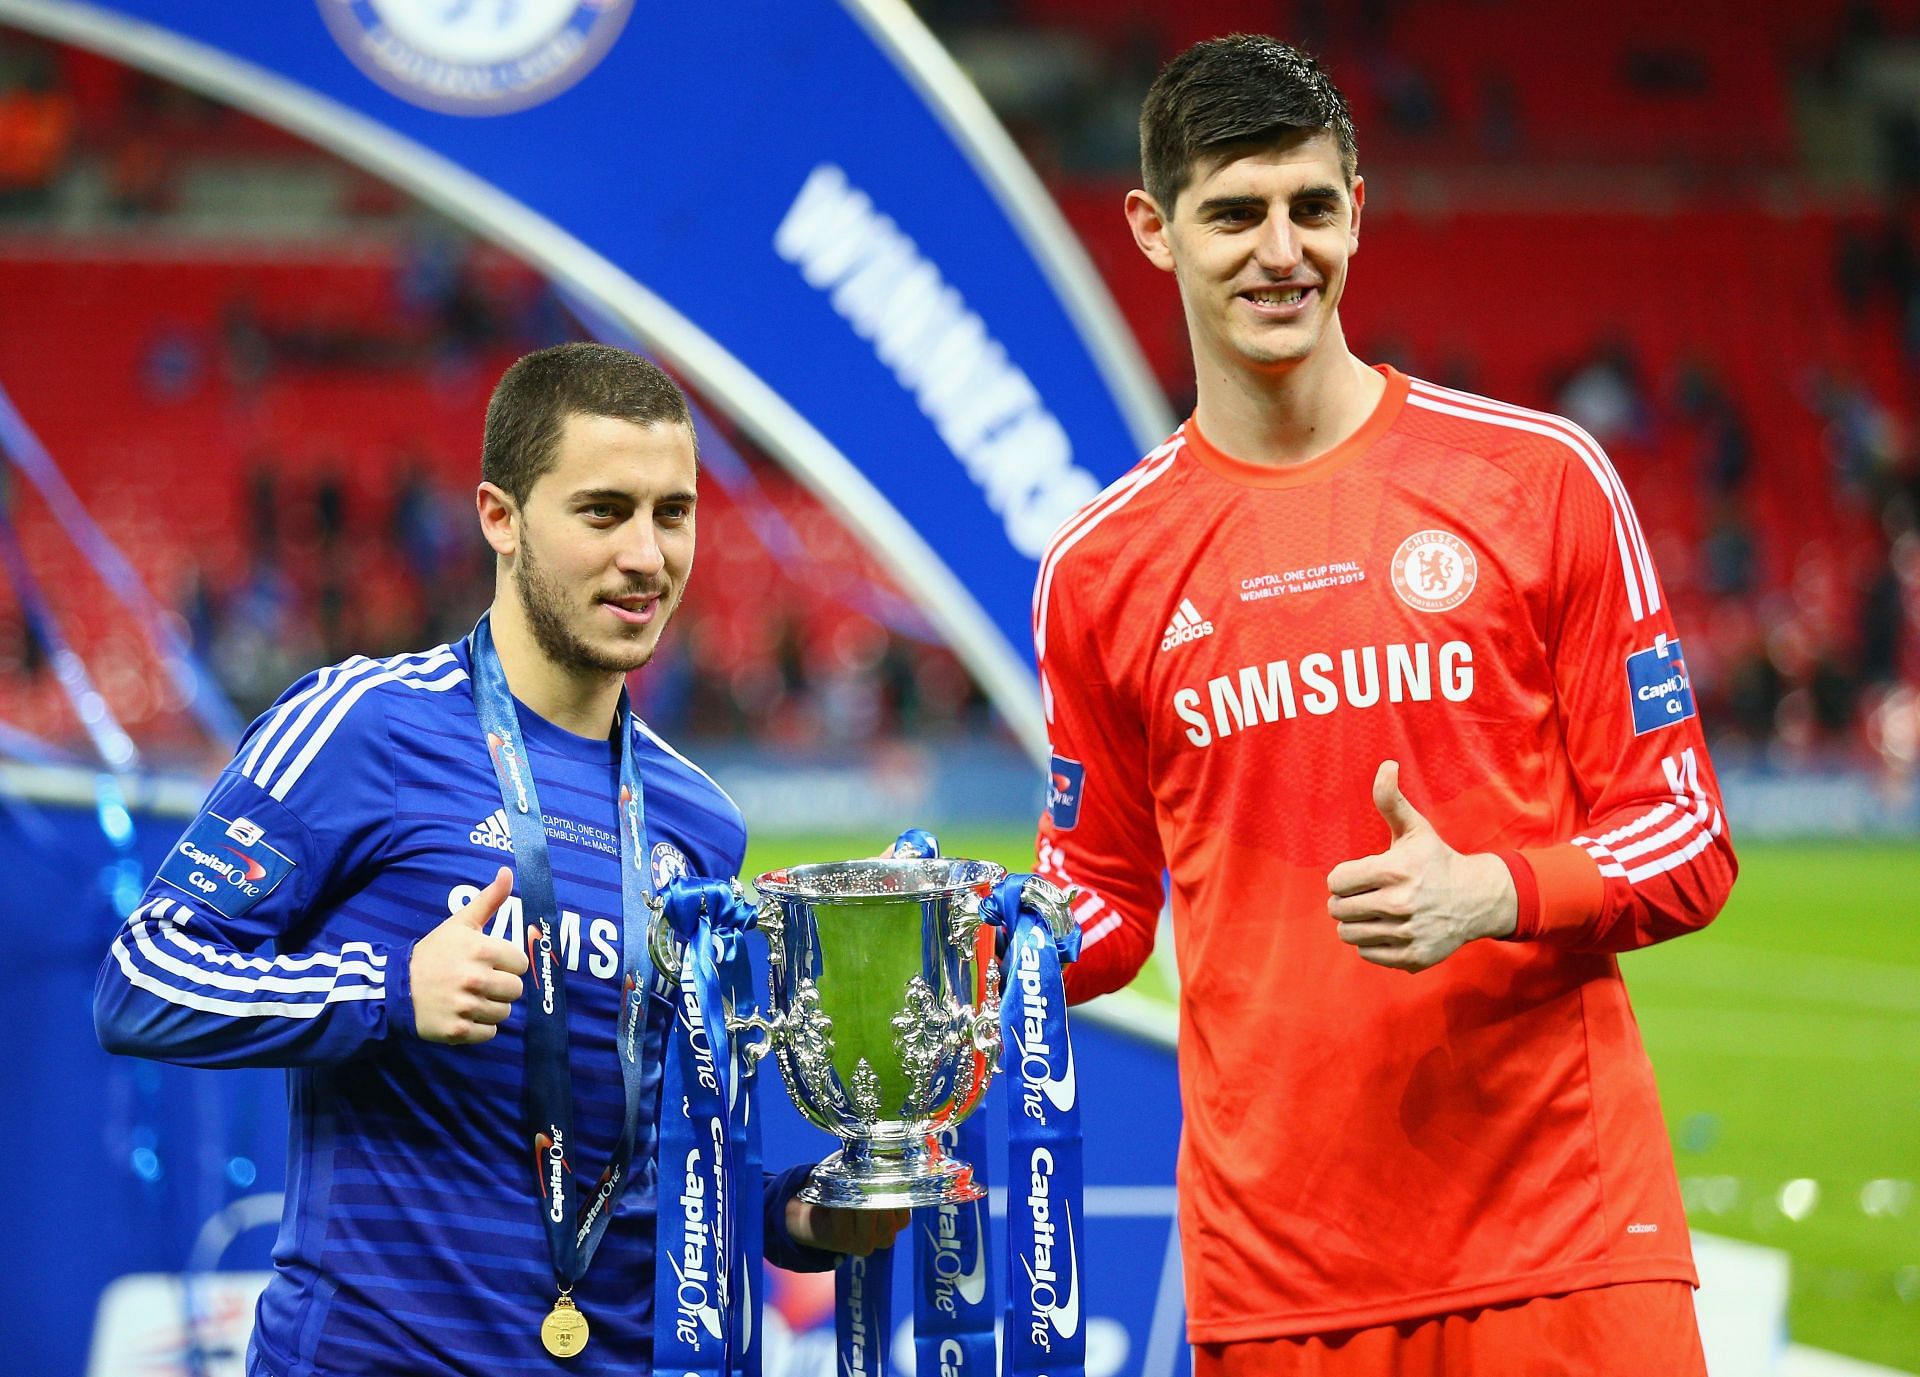 Courtois and Hazard were also teammates at Chelsea.